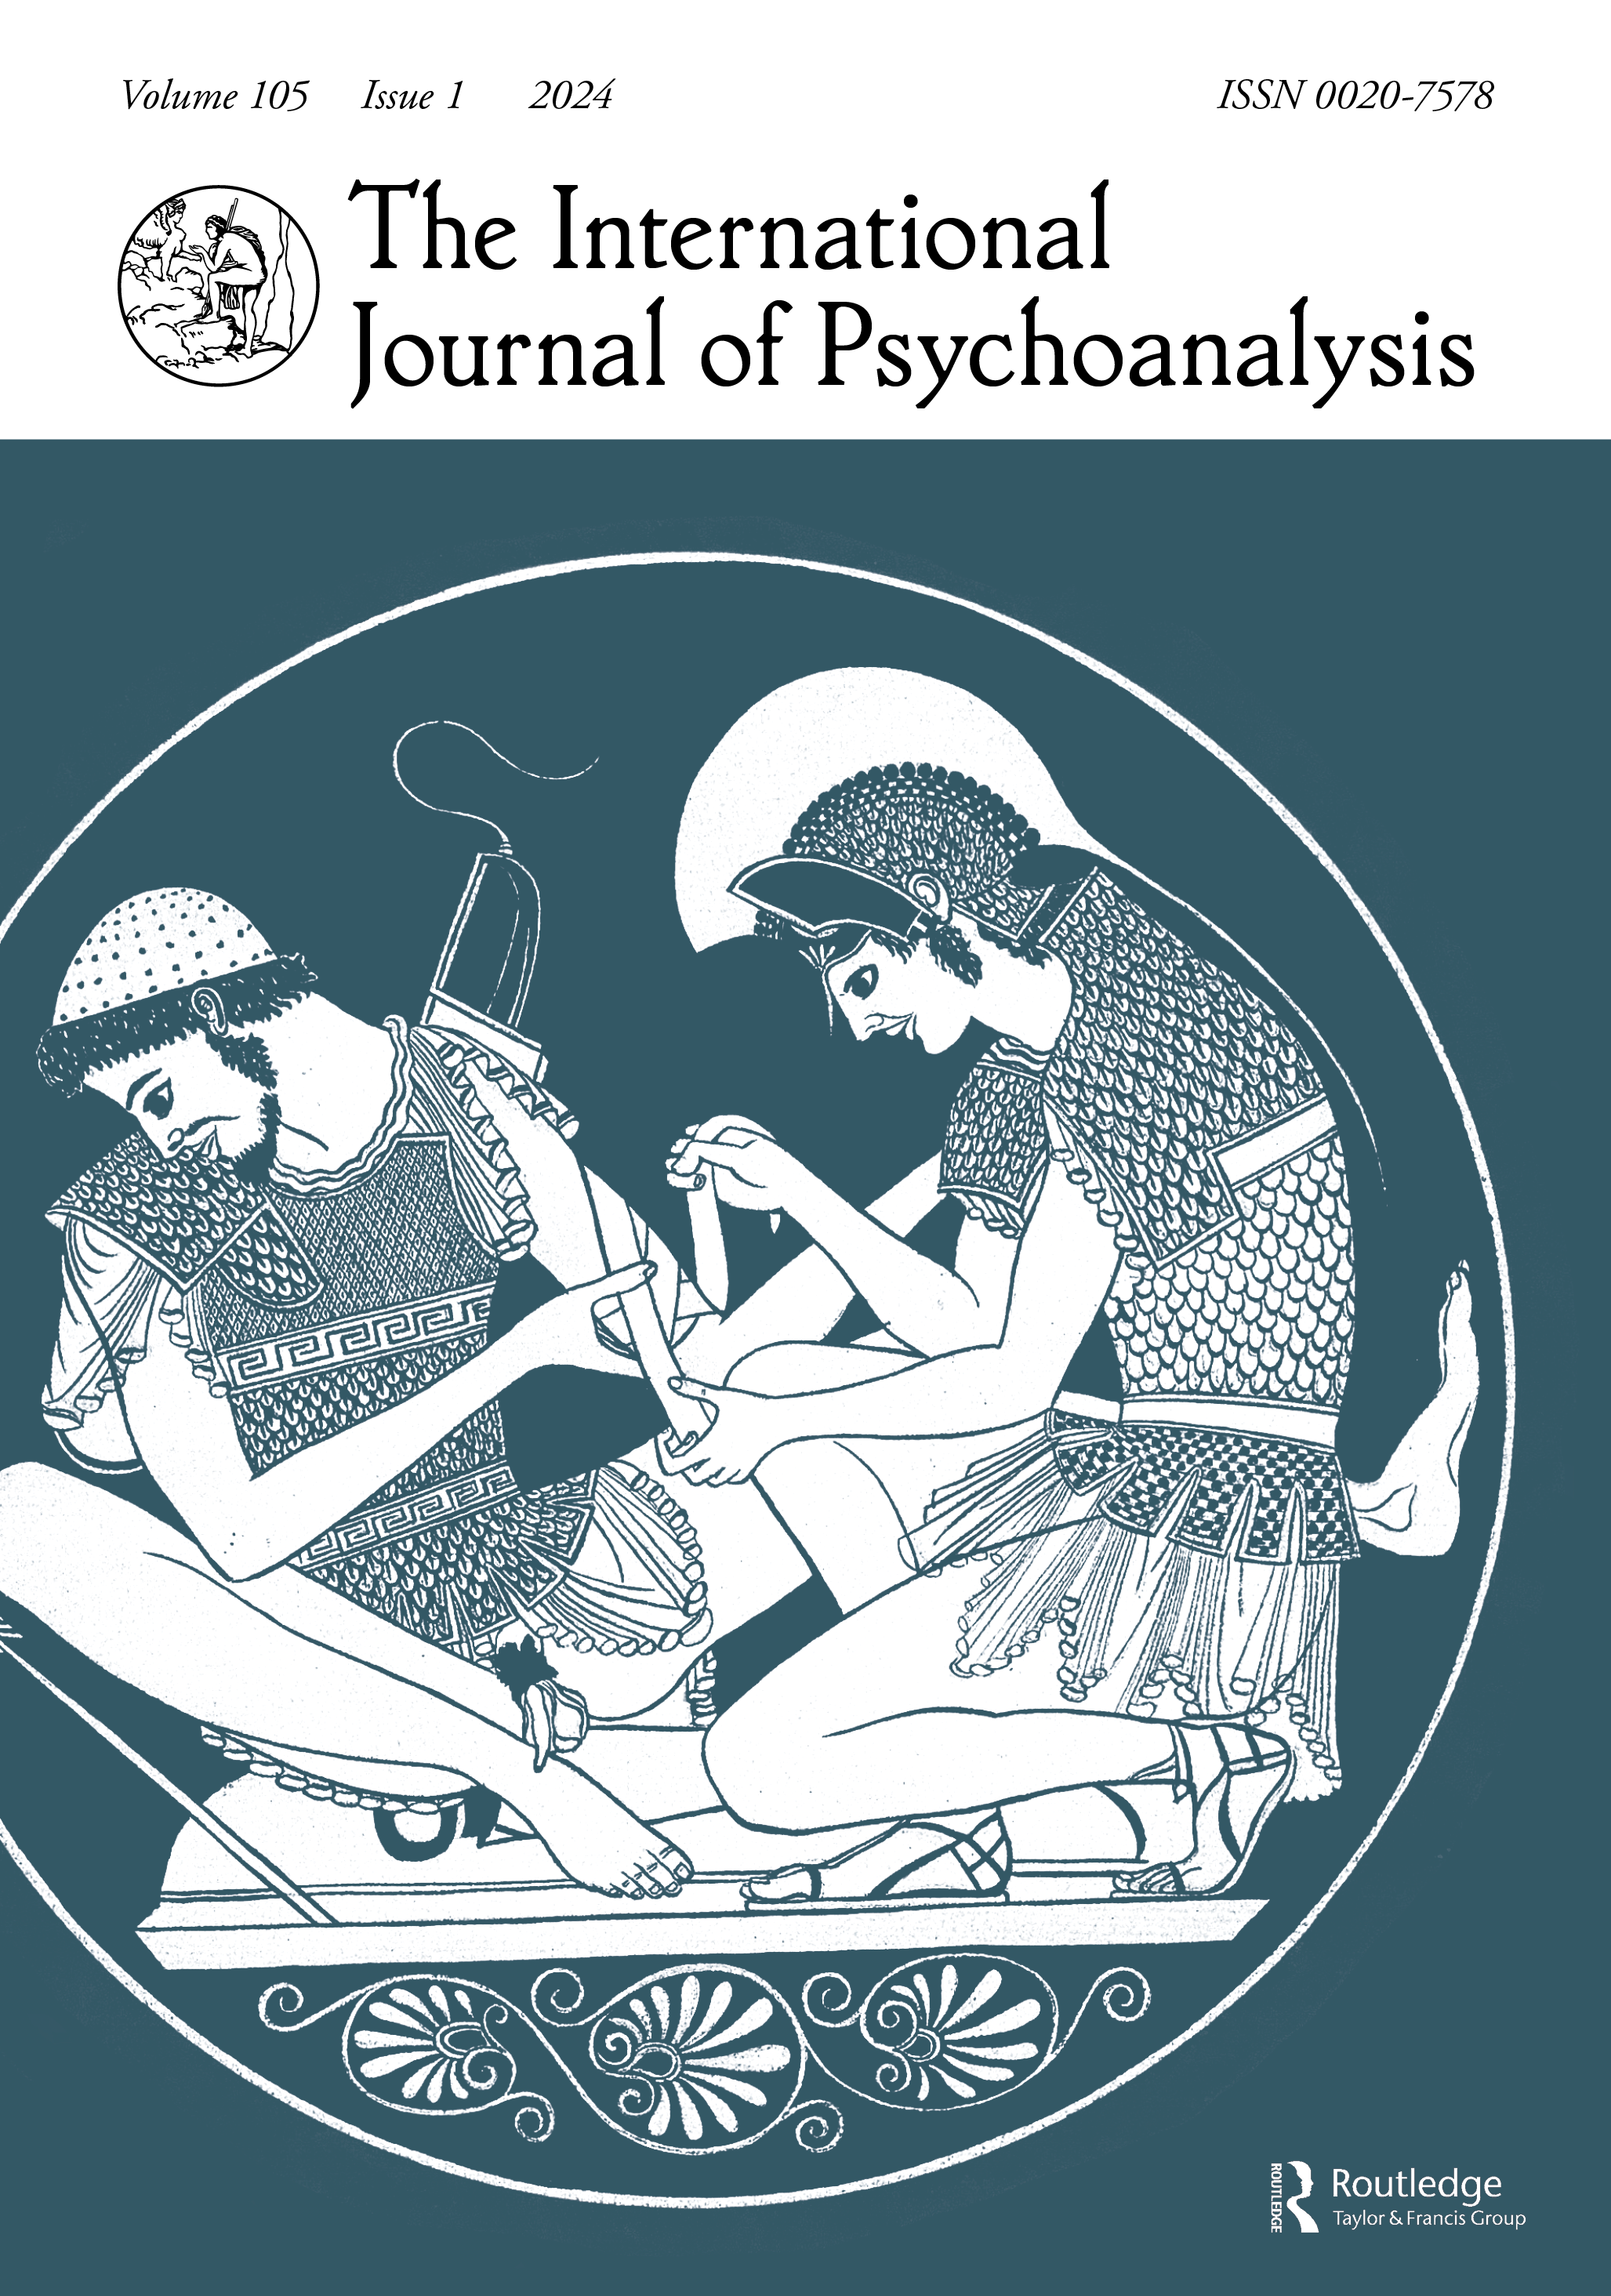 International Journal of Psychoanalysis Cover Volume 105, Issue 1, 2024